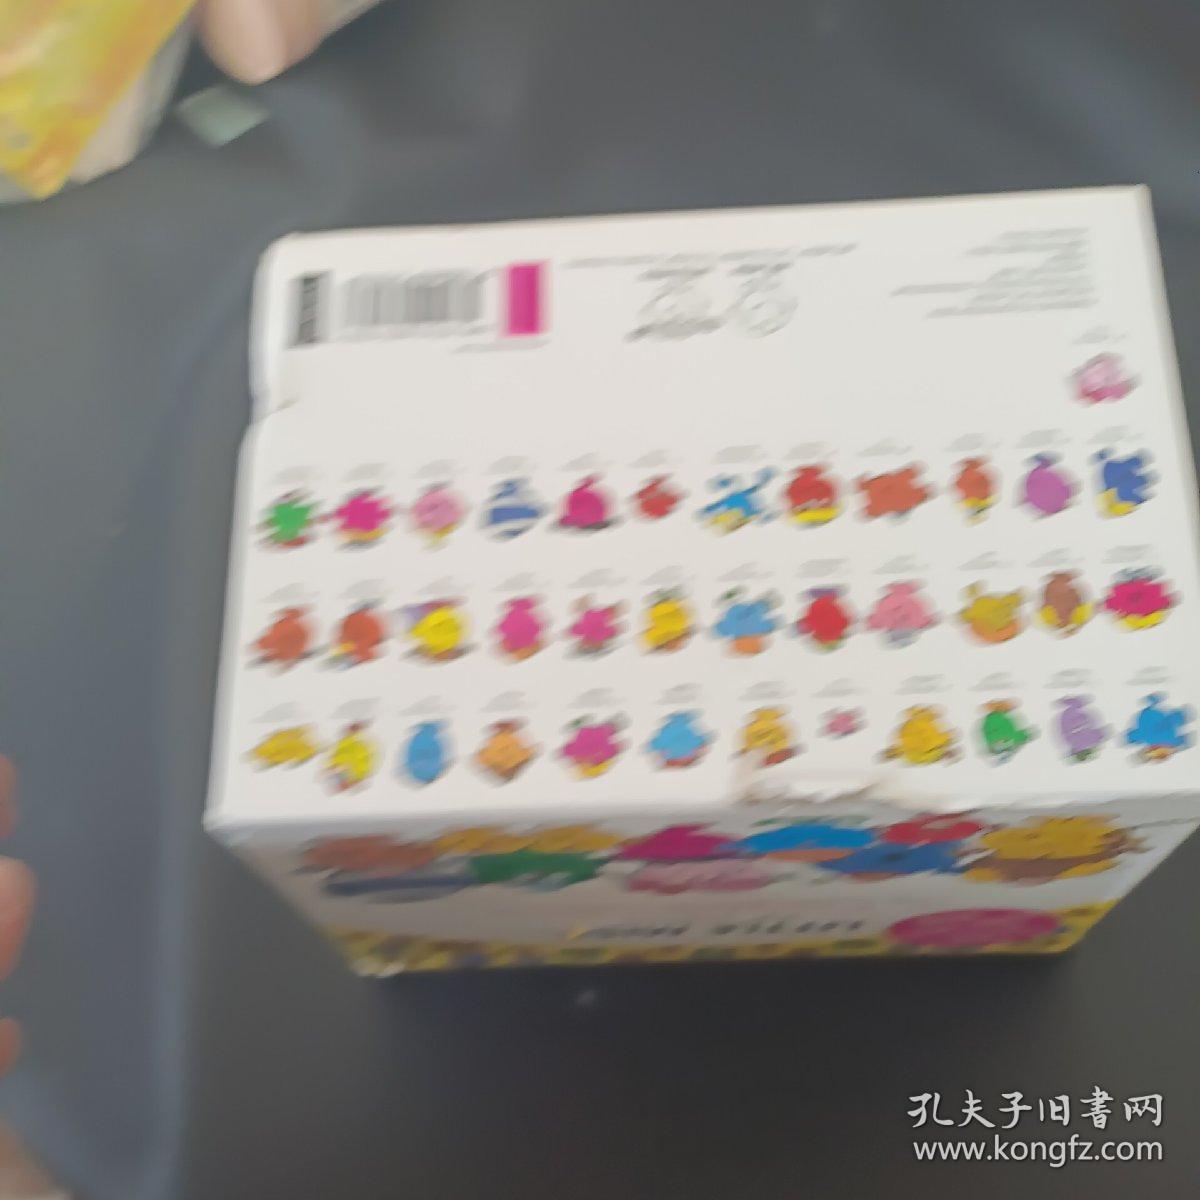 Little Miss 37-copy Complete Set 妙小姐37册全集